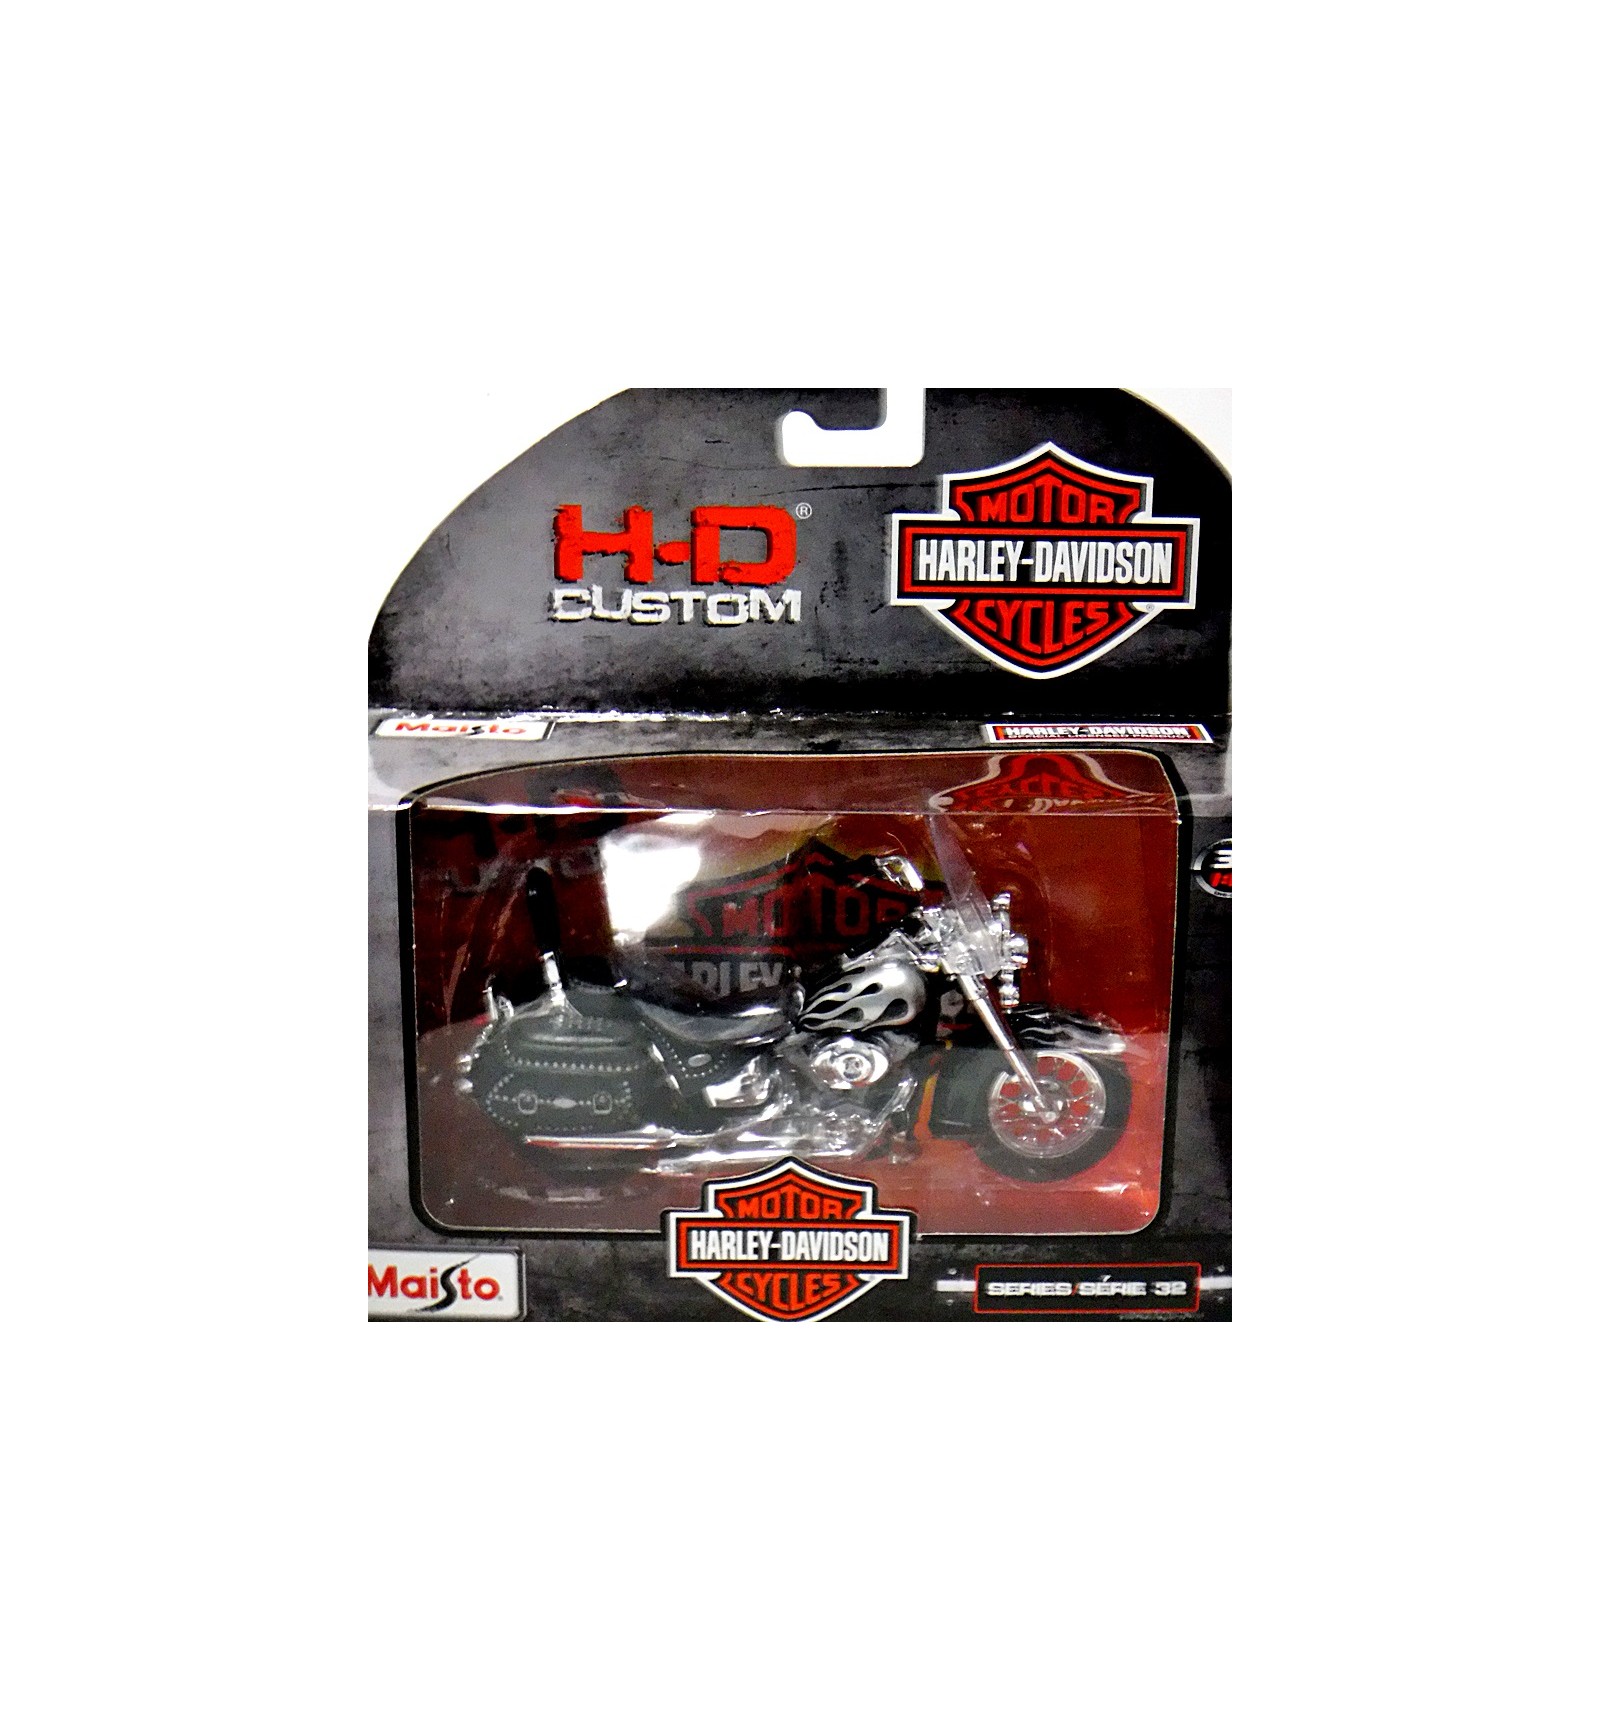 Maisto Model Scale 1:18 Harley Davidson 2002 FLSTC HERITAGE SOFTAIL CLASSIC 